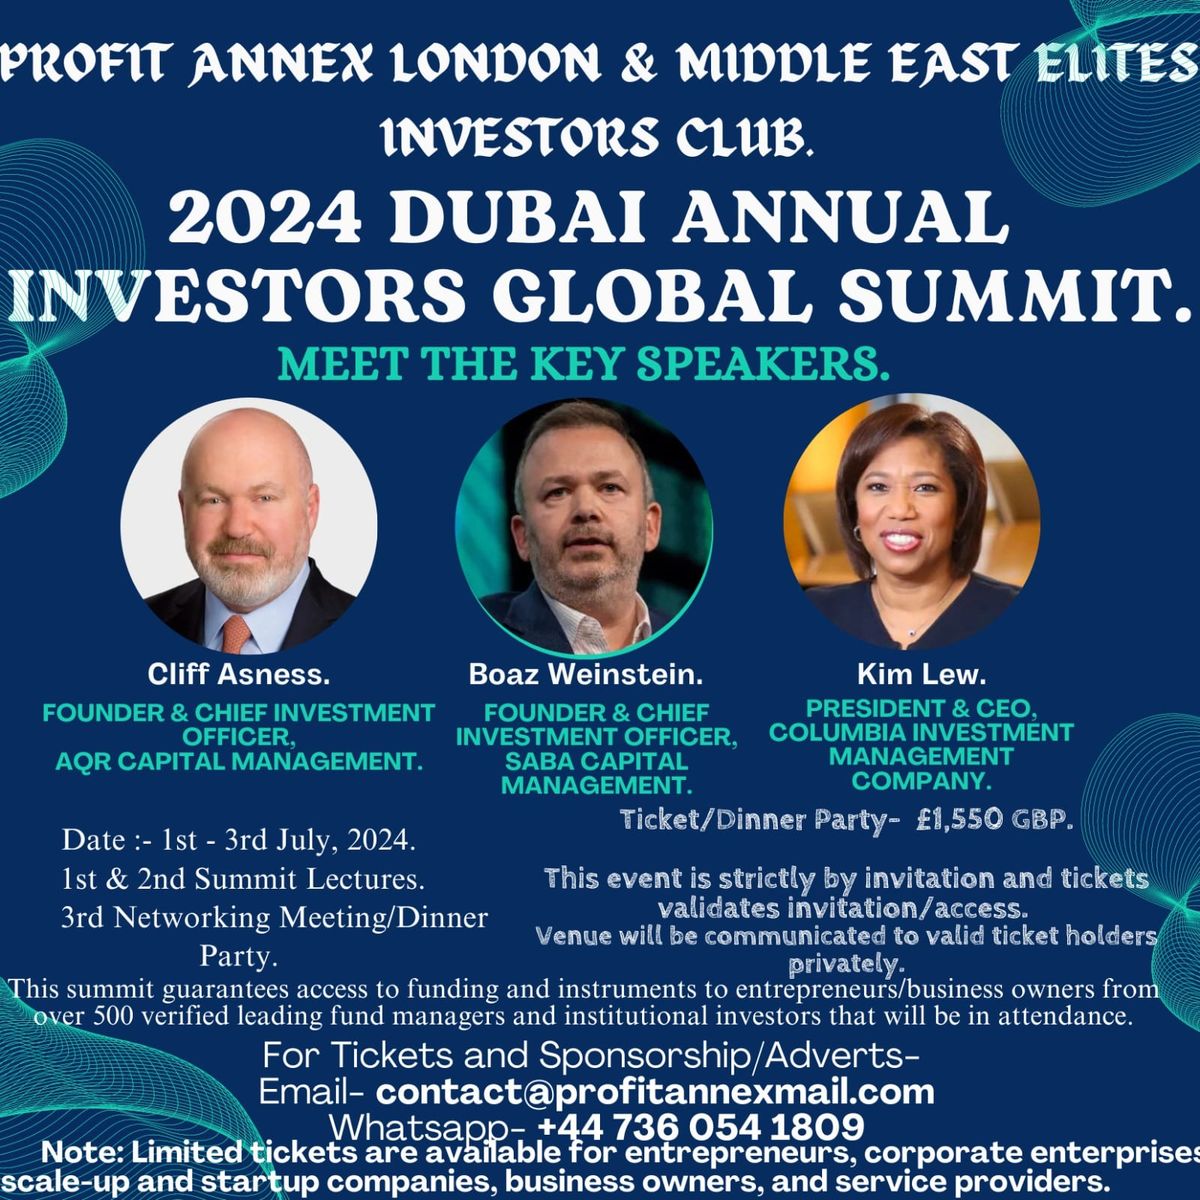 2024 Dubai Annual Investors Global Summit.